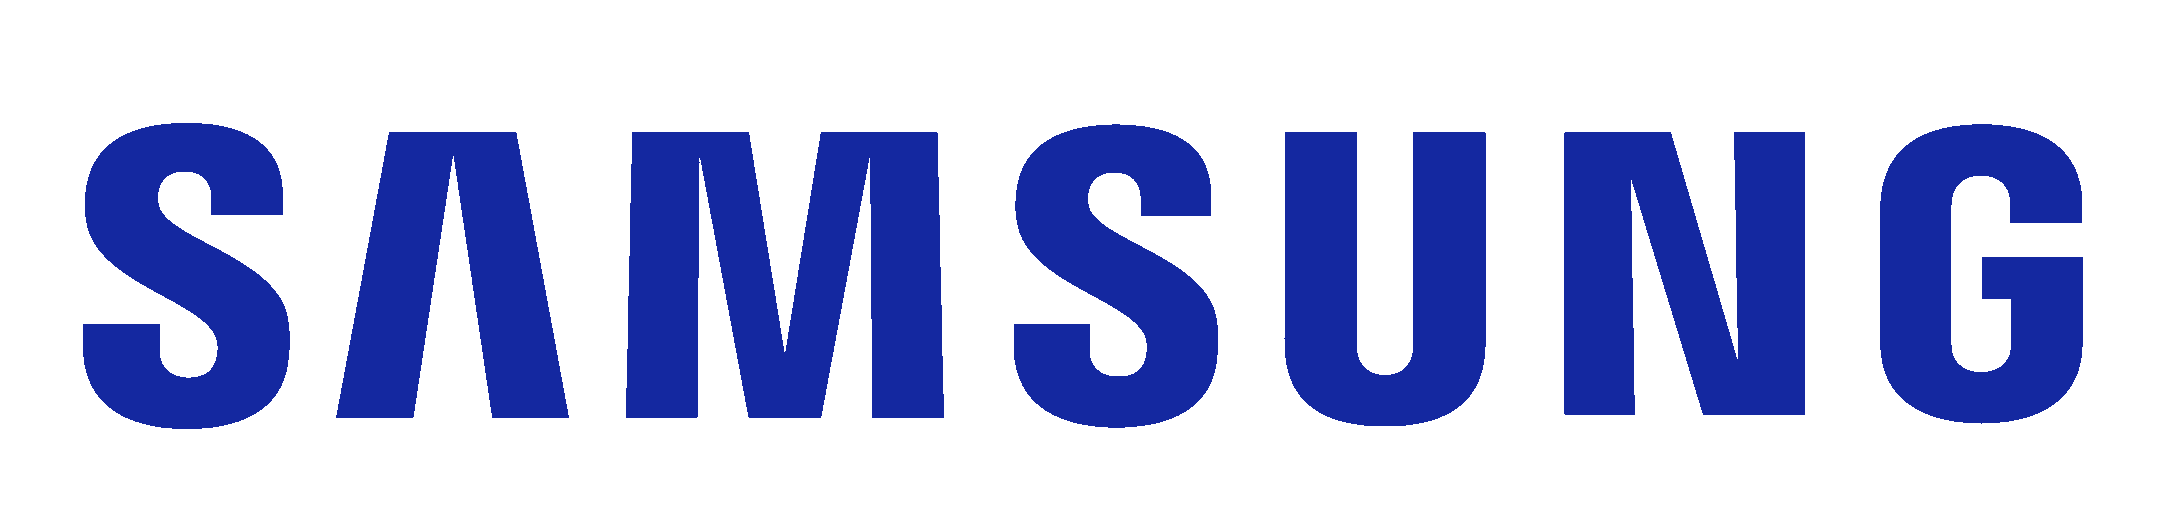 Samsung-logo-2015-Nobg.gif